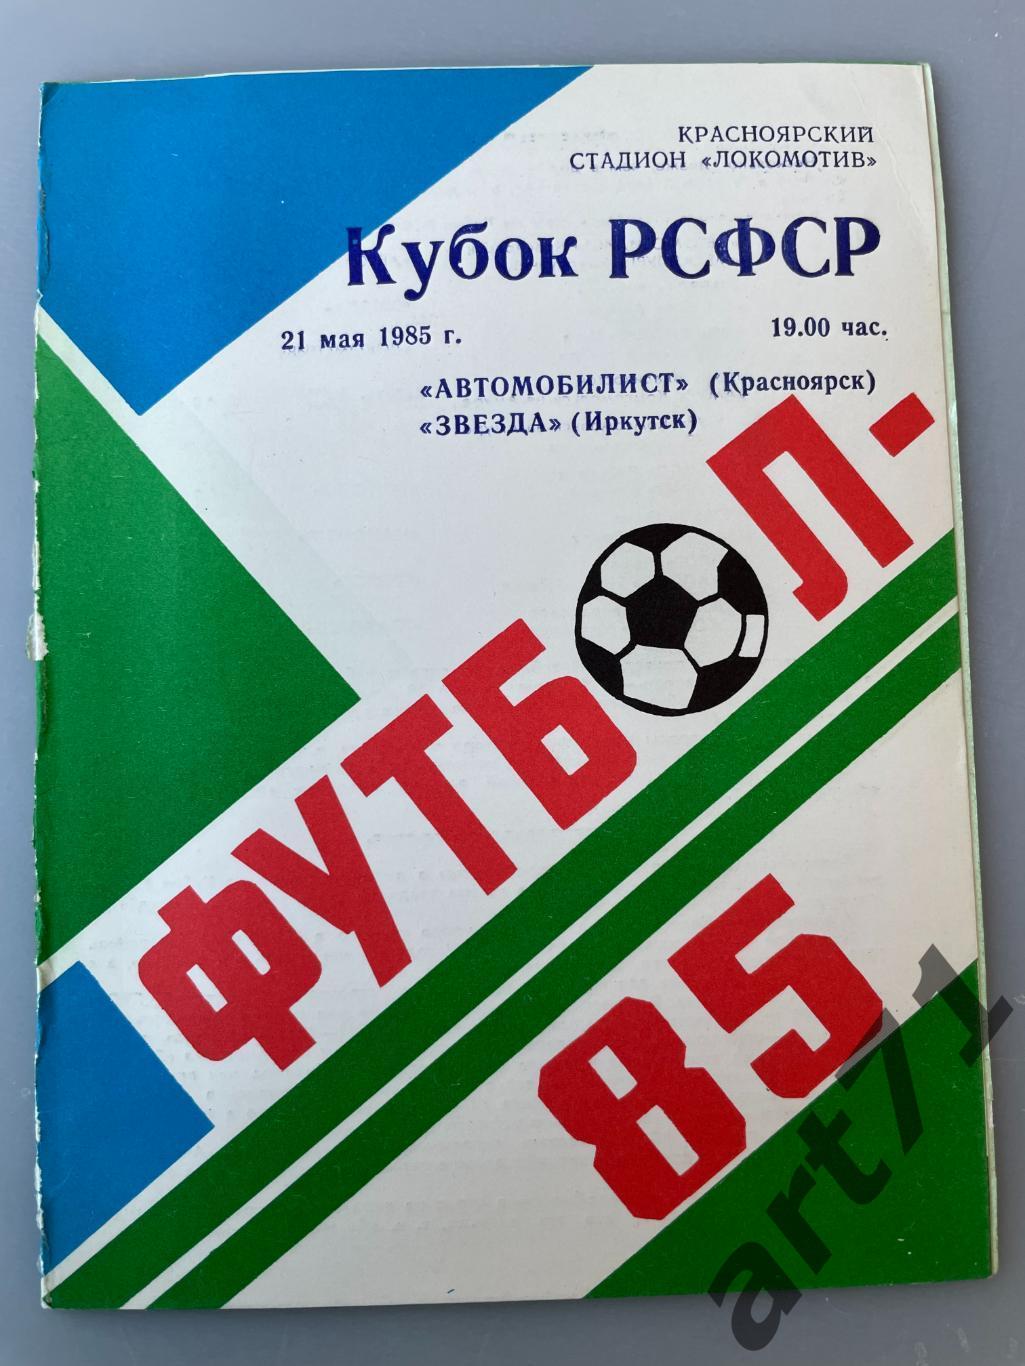 Автомобилист Красноярск - Звезда Иркутск 1985 кубок РСФСР